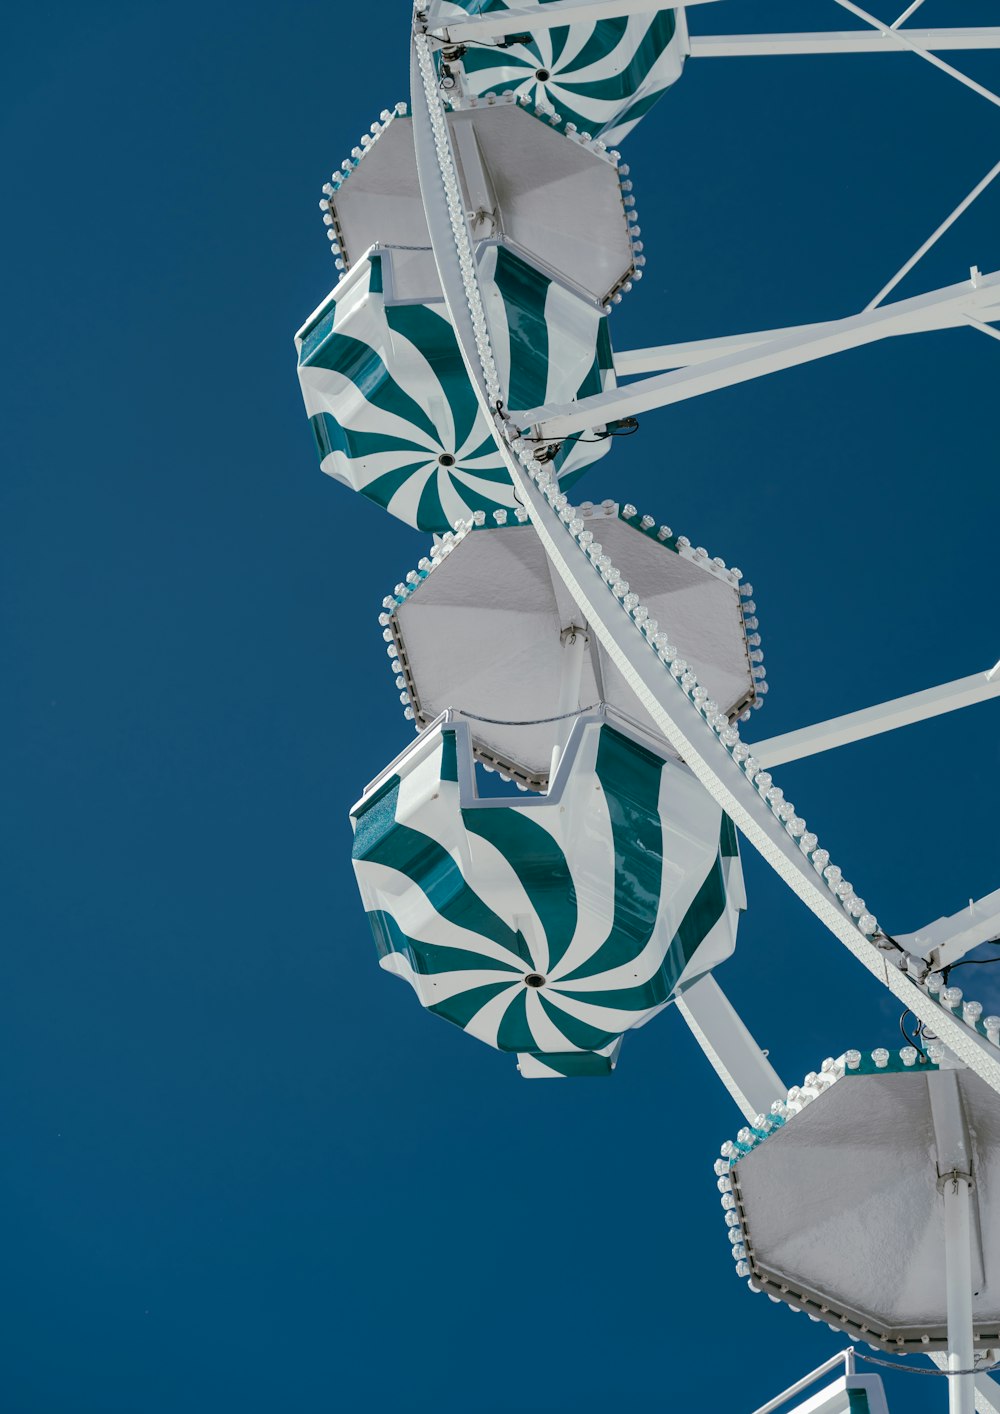 a green and white ferris wheel against a blue sky